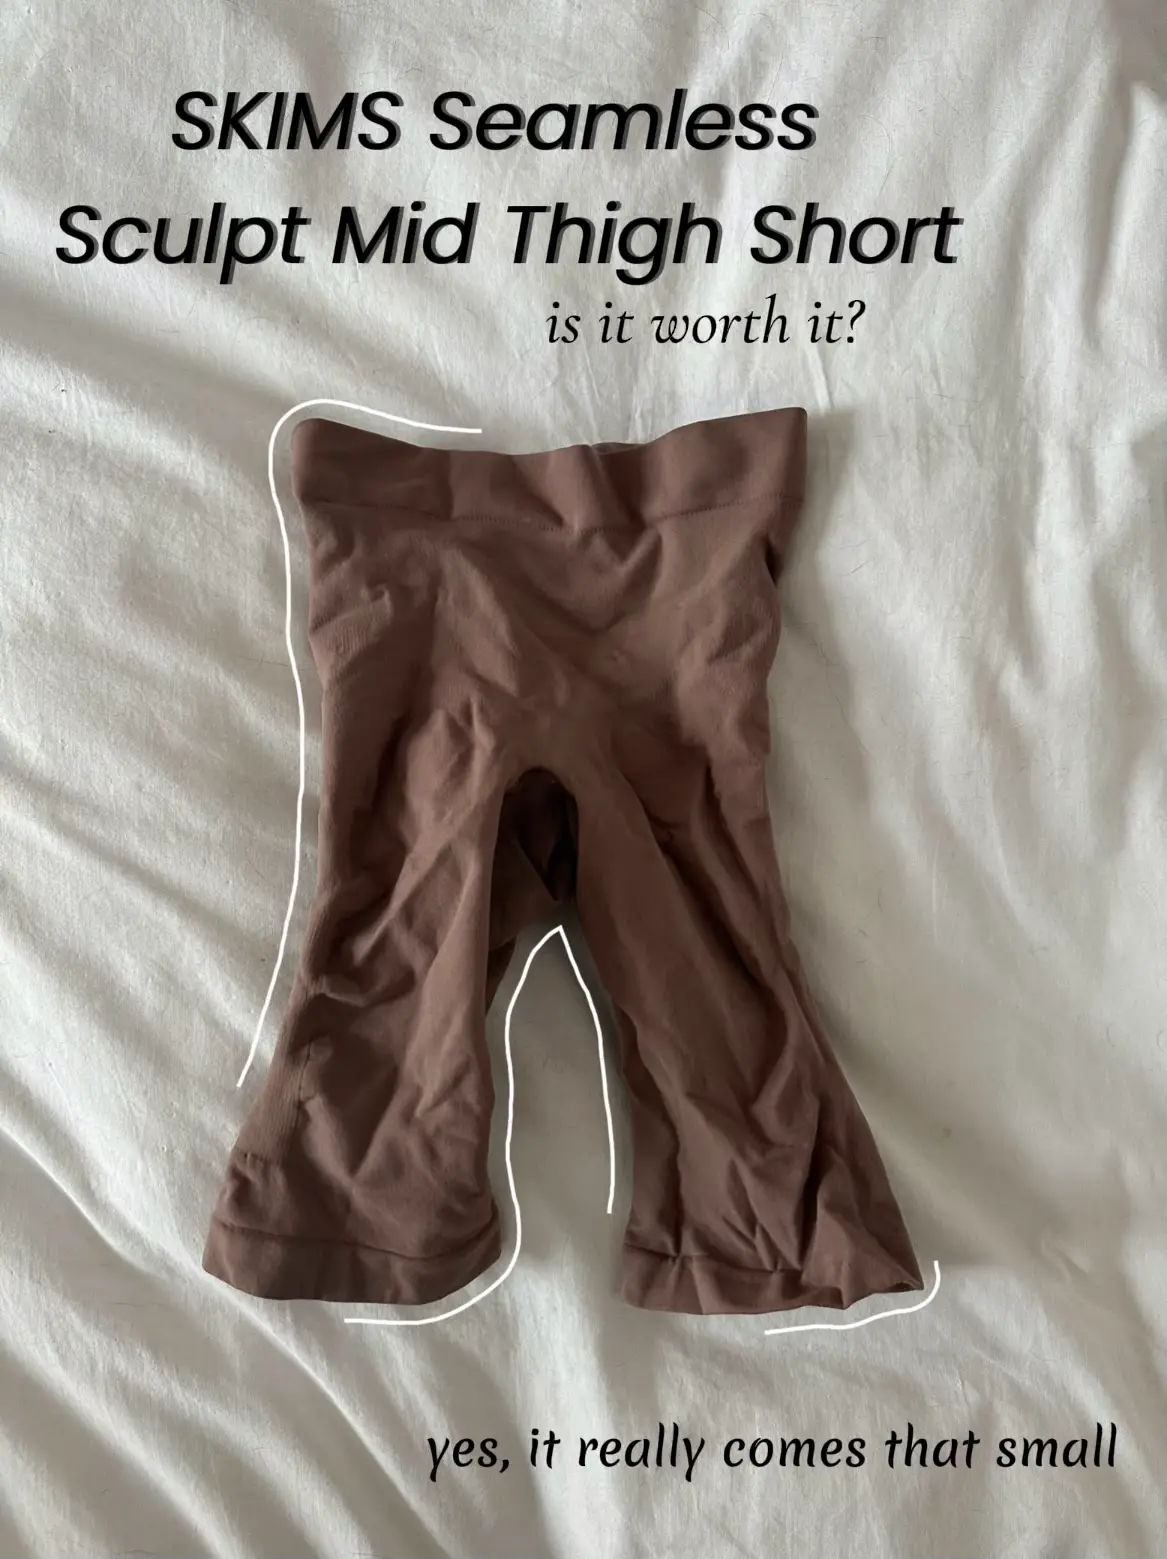 SKIMS Sheer Sculpt Low Back Short - Bronze, M  Cut clothes, Braless babes,  Mid thigh shorts